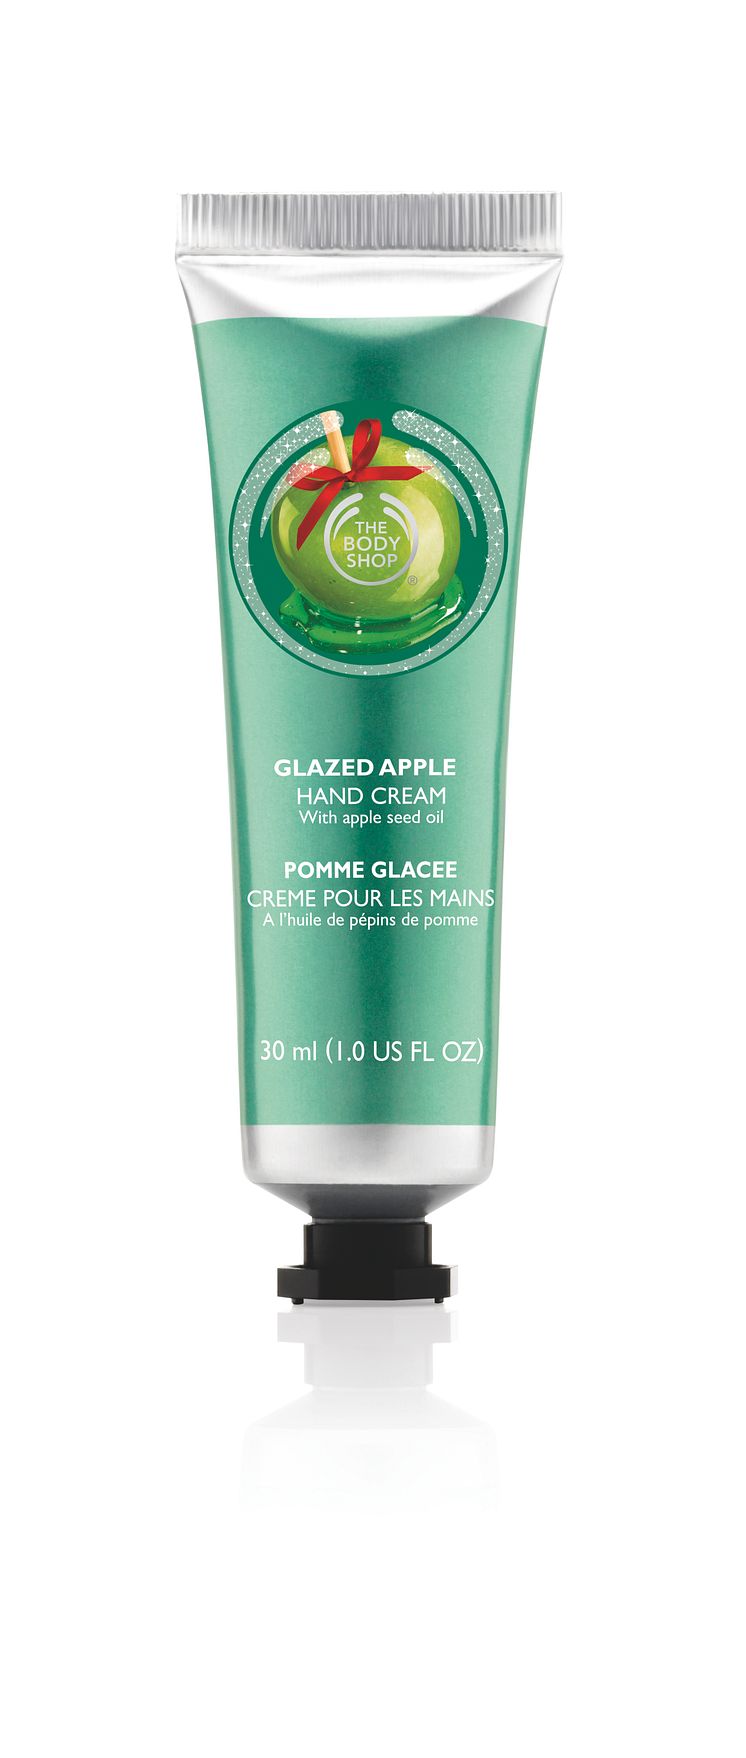 Glazed Apple Hand Cream